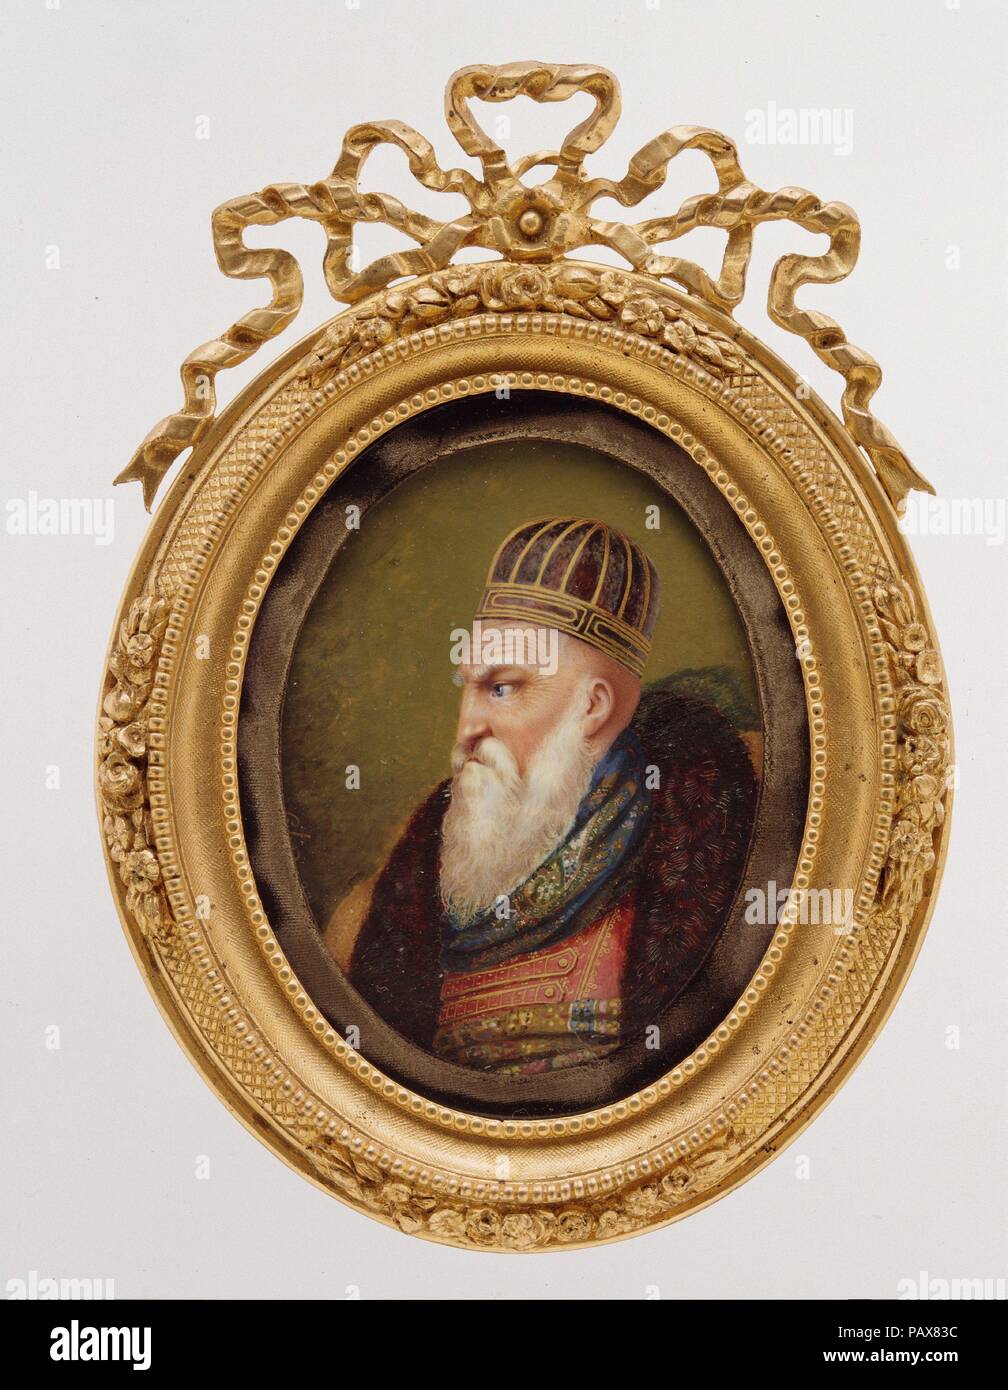 Ali Pasha (born about 1741, died 1822). Artist: Jacob Ritter von Hartmann (German, 1795-1873). Dimensions: Oval, 4 1/8 x 3 1/4 in. (105 x 84 mm). Date: 1822. Museum: Metropolitan Museum of Art, New York, USA. Stock Photo